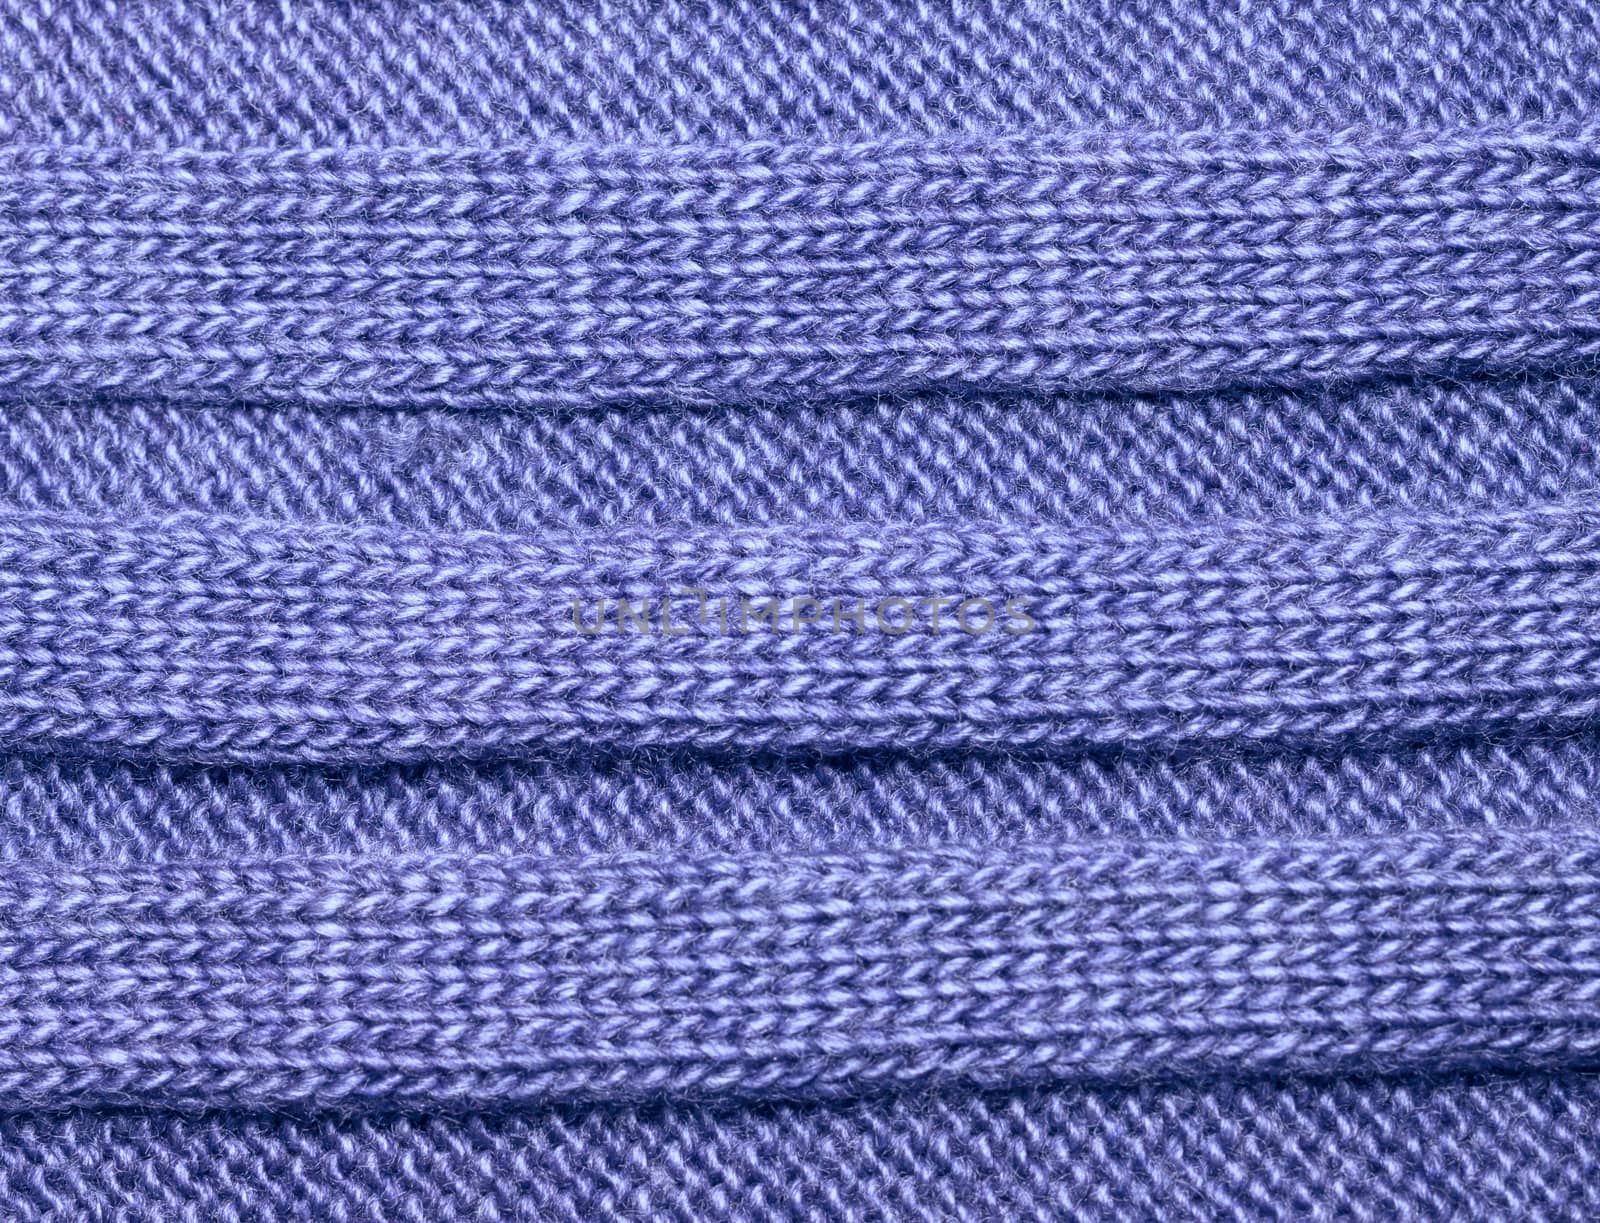 Brown ribbed knit wool like texture, textured fabrics knitted je by KoliadzynskaIryna